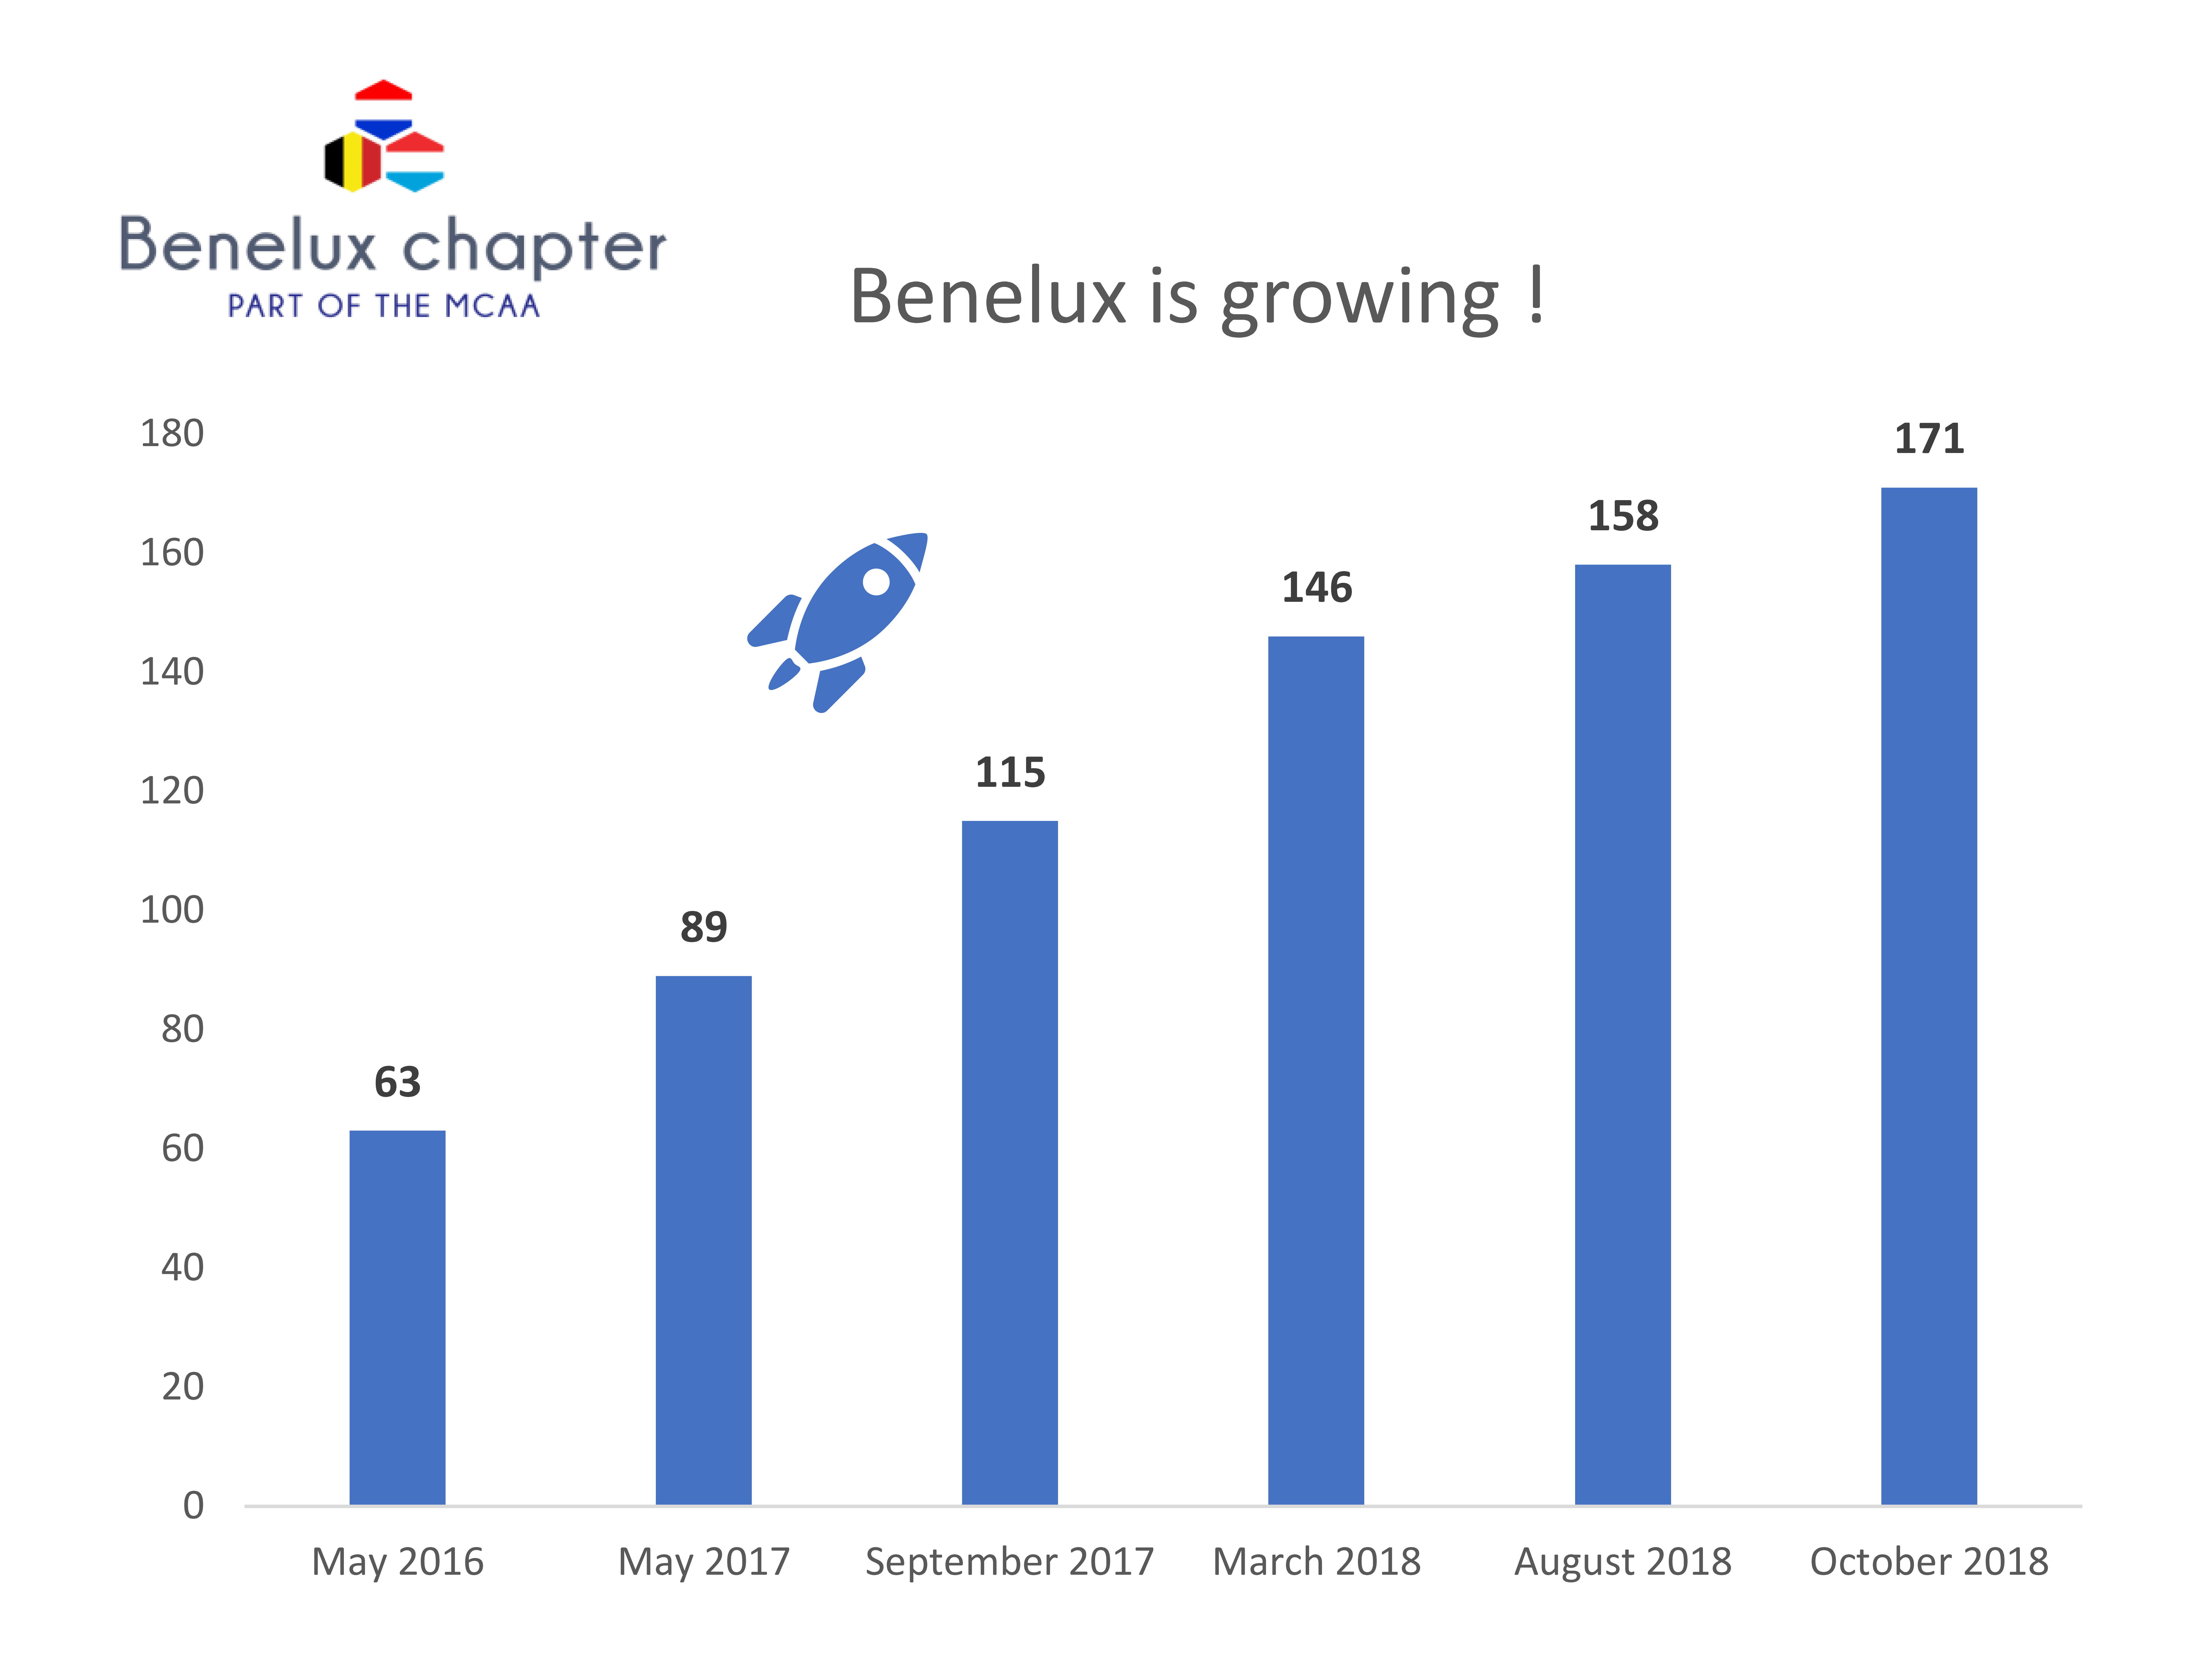 Benelux is growing!